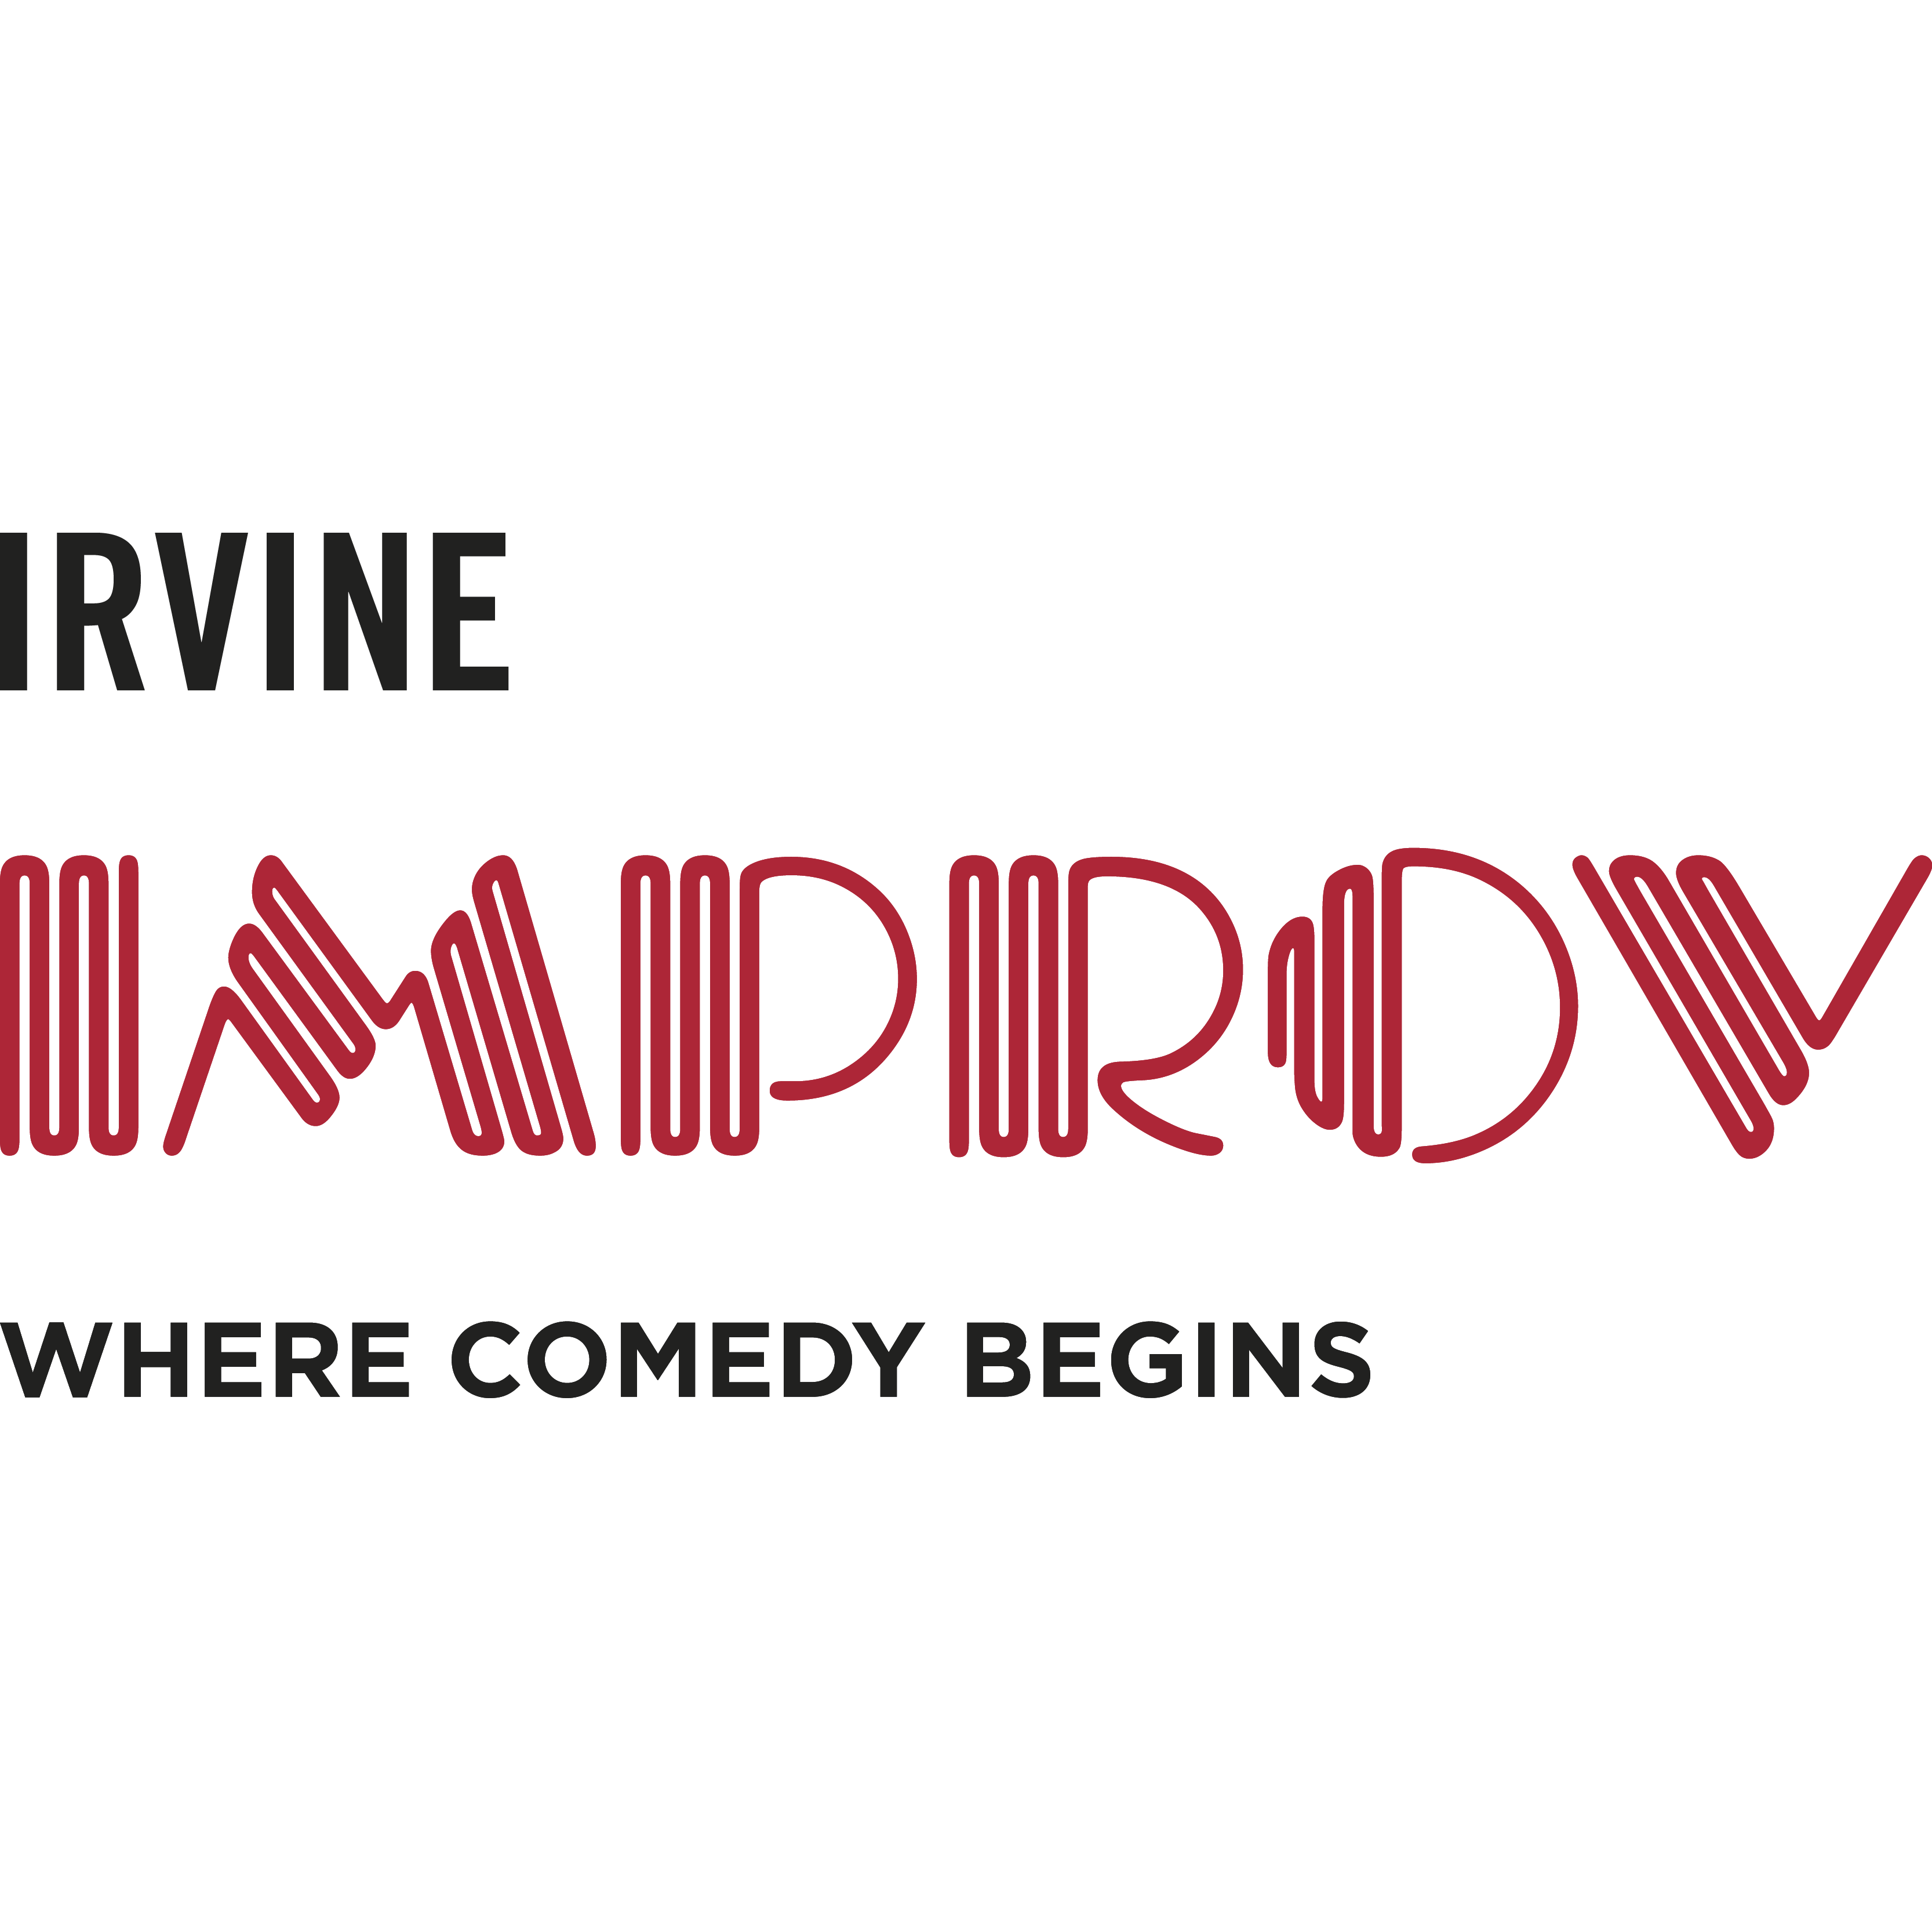 Irvine Improv Comedy Club in Irvine, CA (949) 8545...